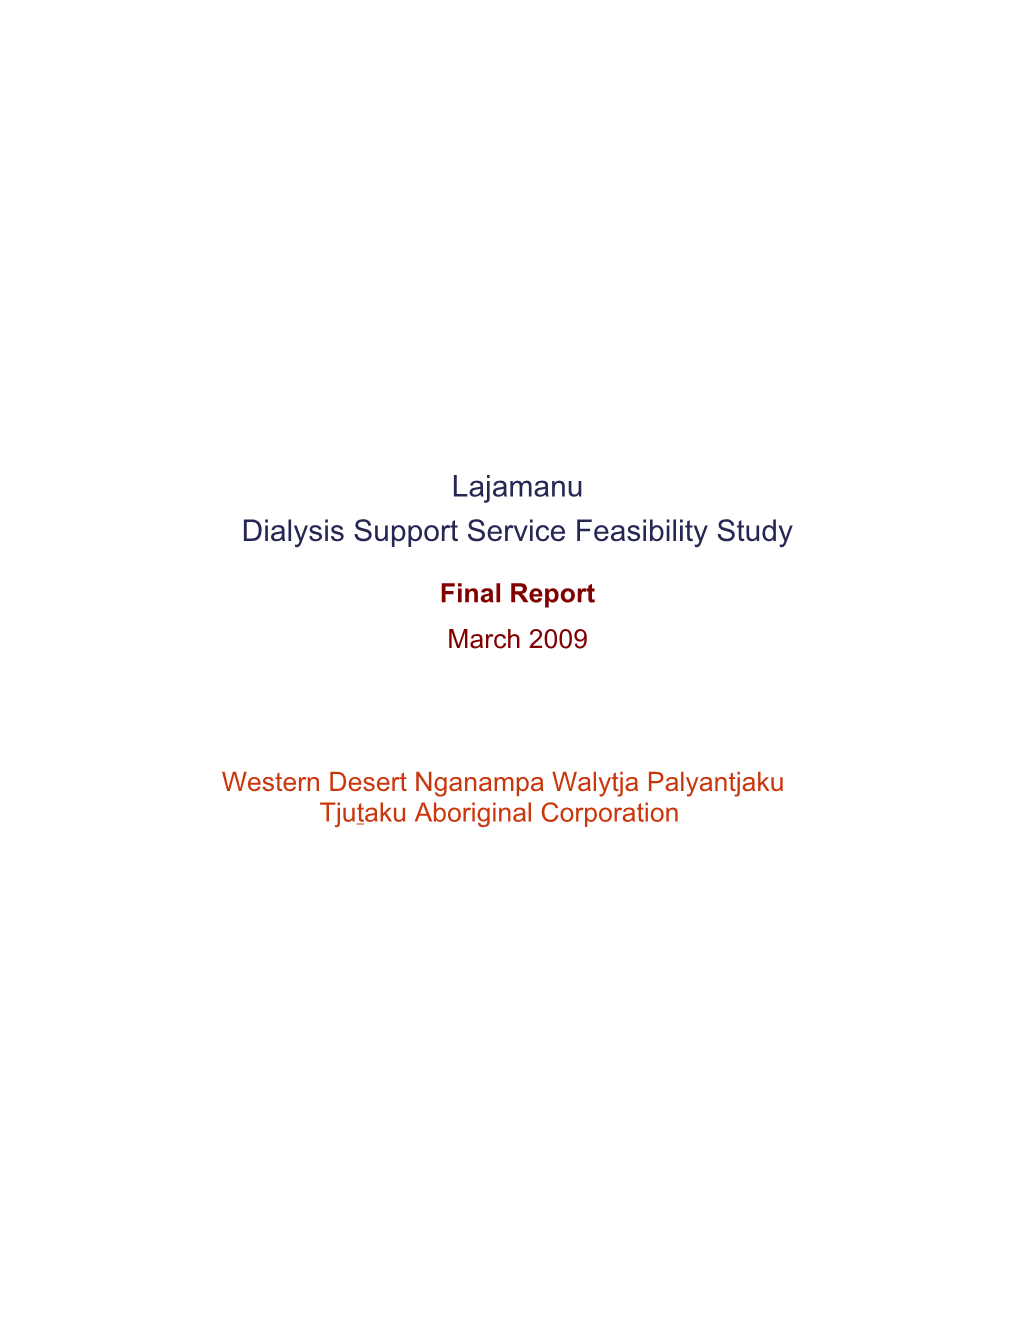 1. the Yuendumu/Lajamanu Dialysis Services Feasibility Study3